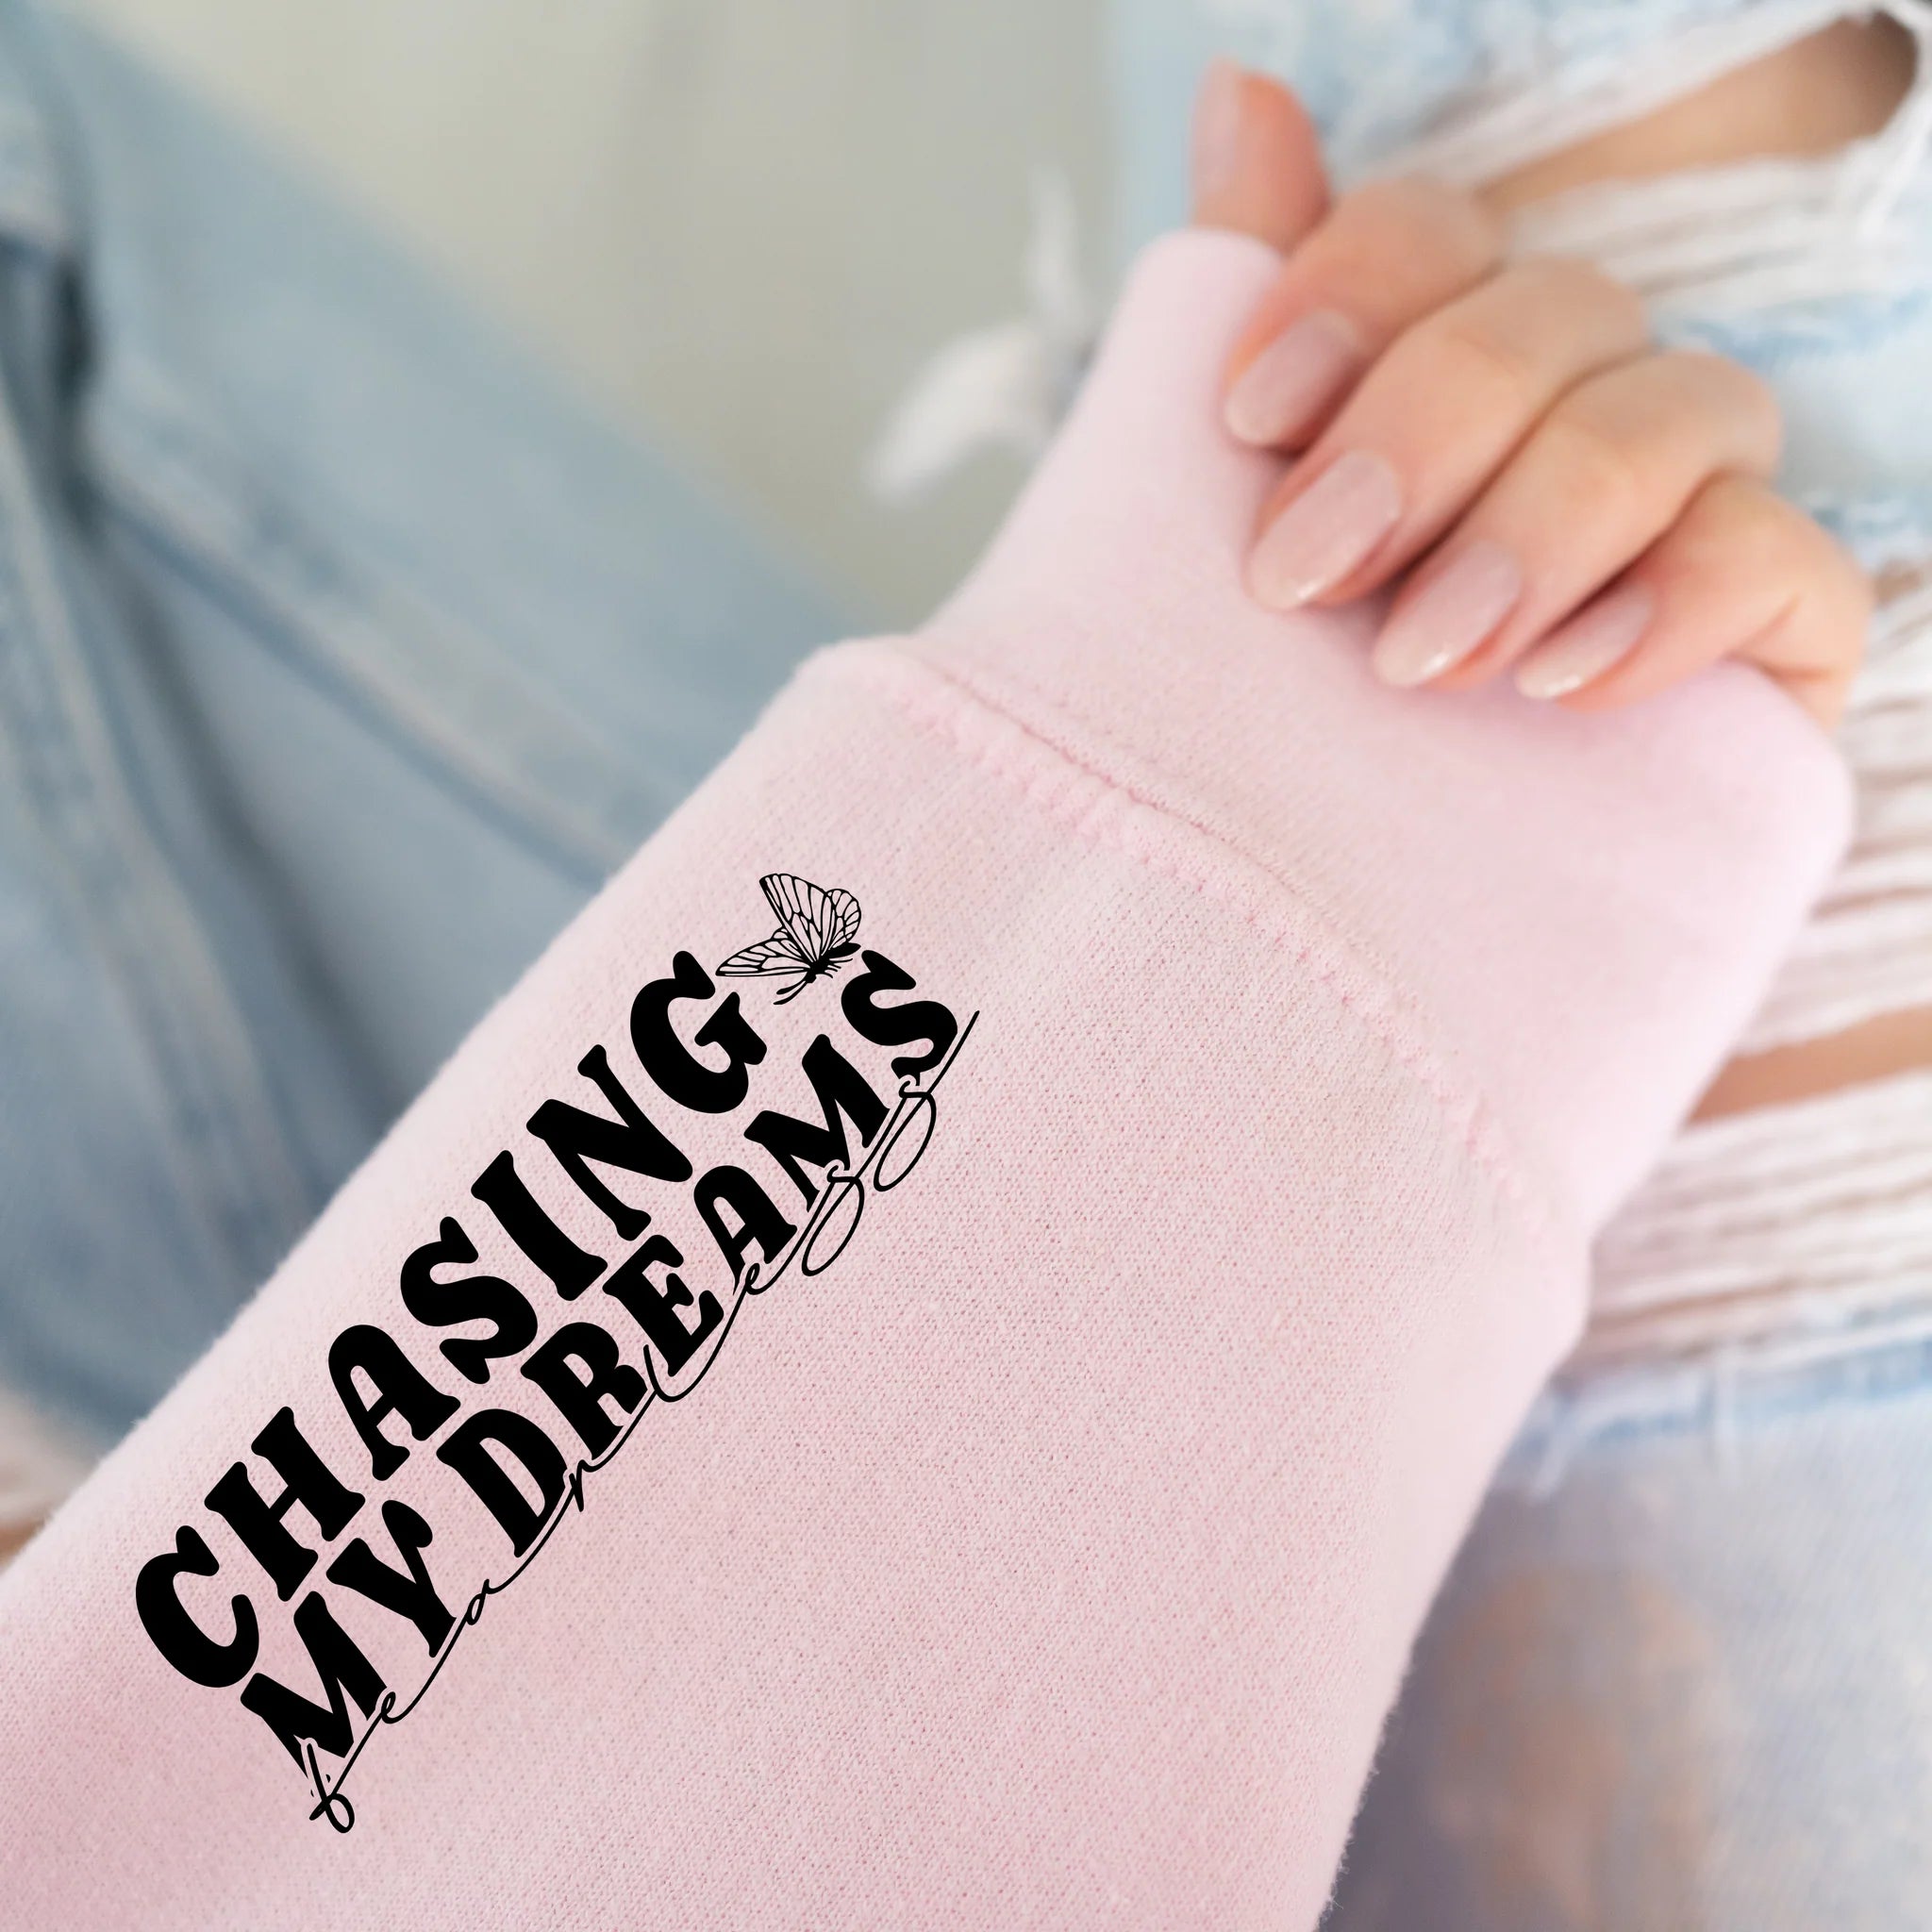 Chasing Dreams Sweatshirt